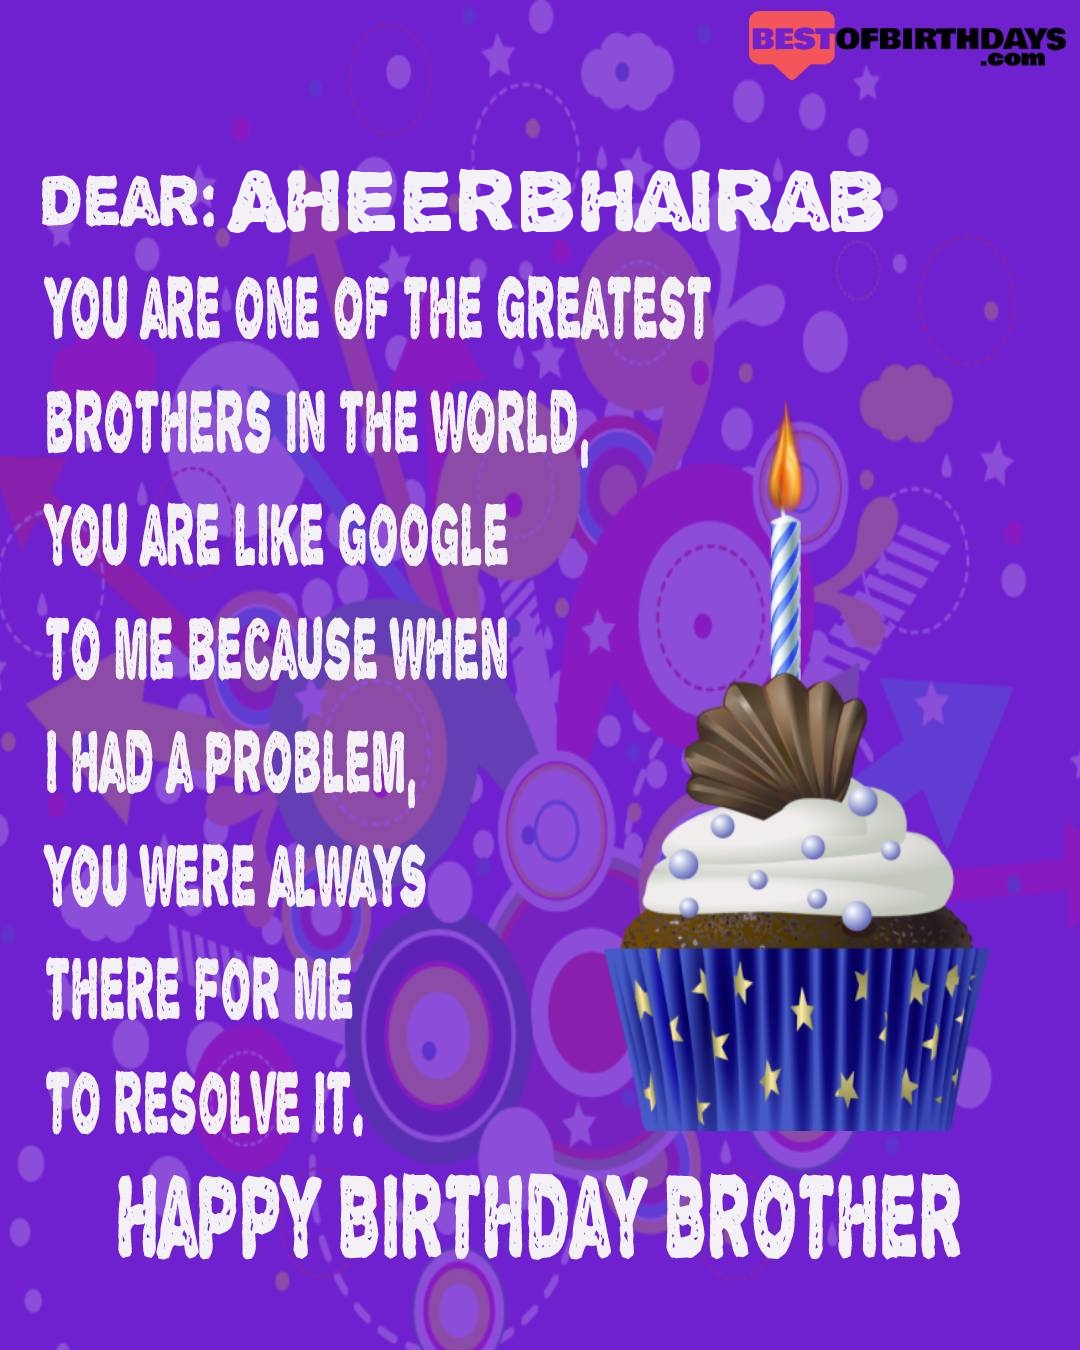 Happy birthday aheerbhairab bhai brother bro